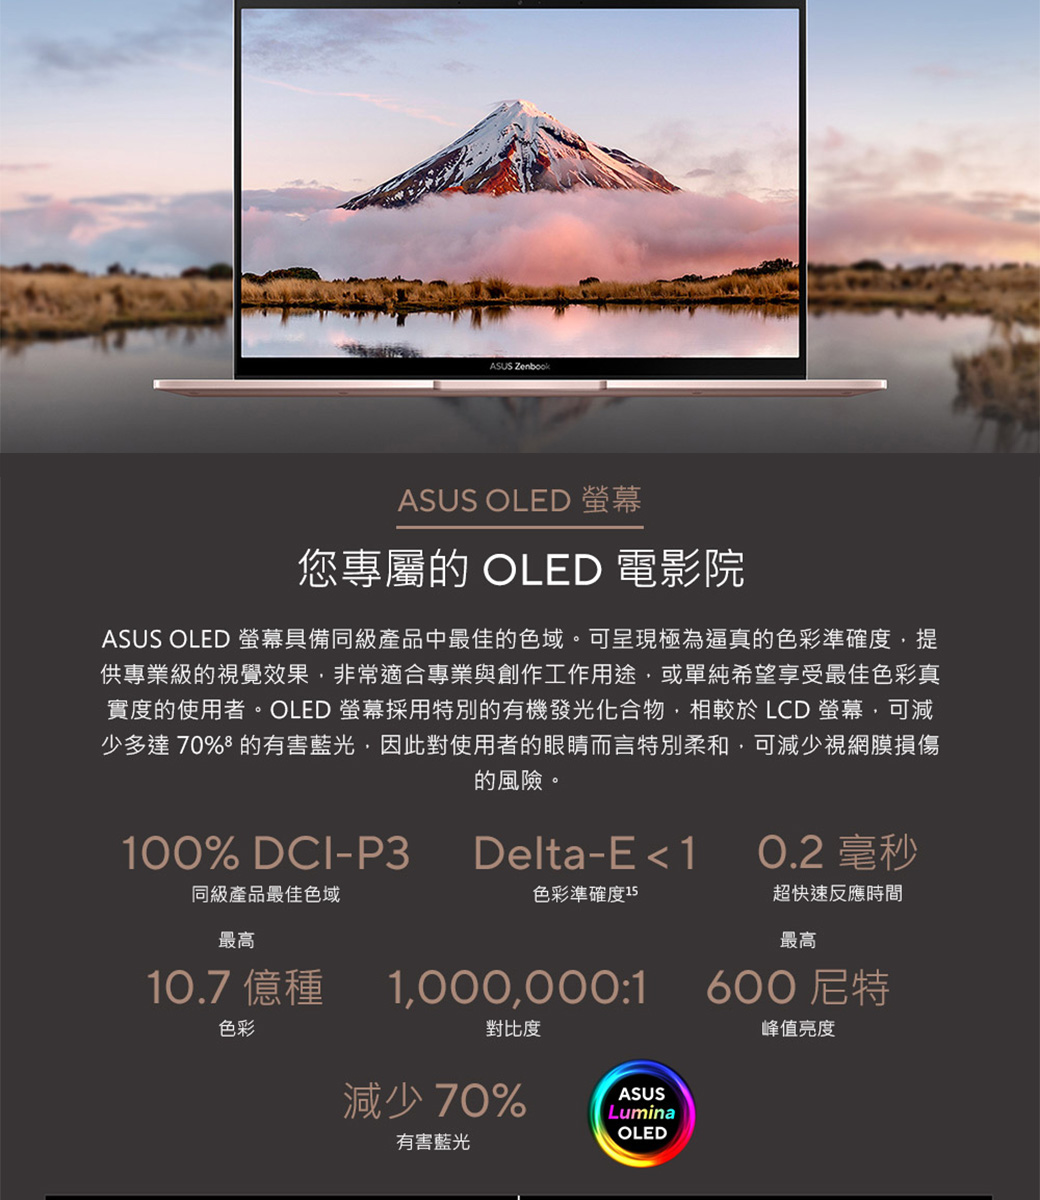 ASUS ZenbookASUS OLED 螢幕您專屬的 OLED 電影院ASUS OLED 螢幕具備同級產品中最佳的色域。可呈現極為逼真的色彩準確度,提供專業級的視覺效果,非常適合專業與創作工作用途,或單純希望享受最佳色彩真實度的使用者。OLED 螢幕採用特別的有機發光化合物,相較於LCD螢幕,可減少多達70%的有害藍光,因此對使用者的眼睛而言特別柔和,可減少視網膜損傷的風險。100% DCI-P3Delta-E 10.2 毫秒同級產品最佳色域色彩準確度15超快速反應時間最高10.7 億種1,000,000:1色彩對比度減少70%有害藍光ASUSLuminaOLED最高600尼特峰值亮度